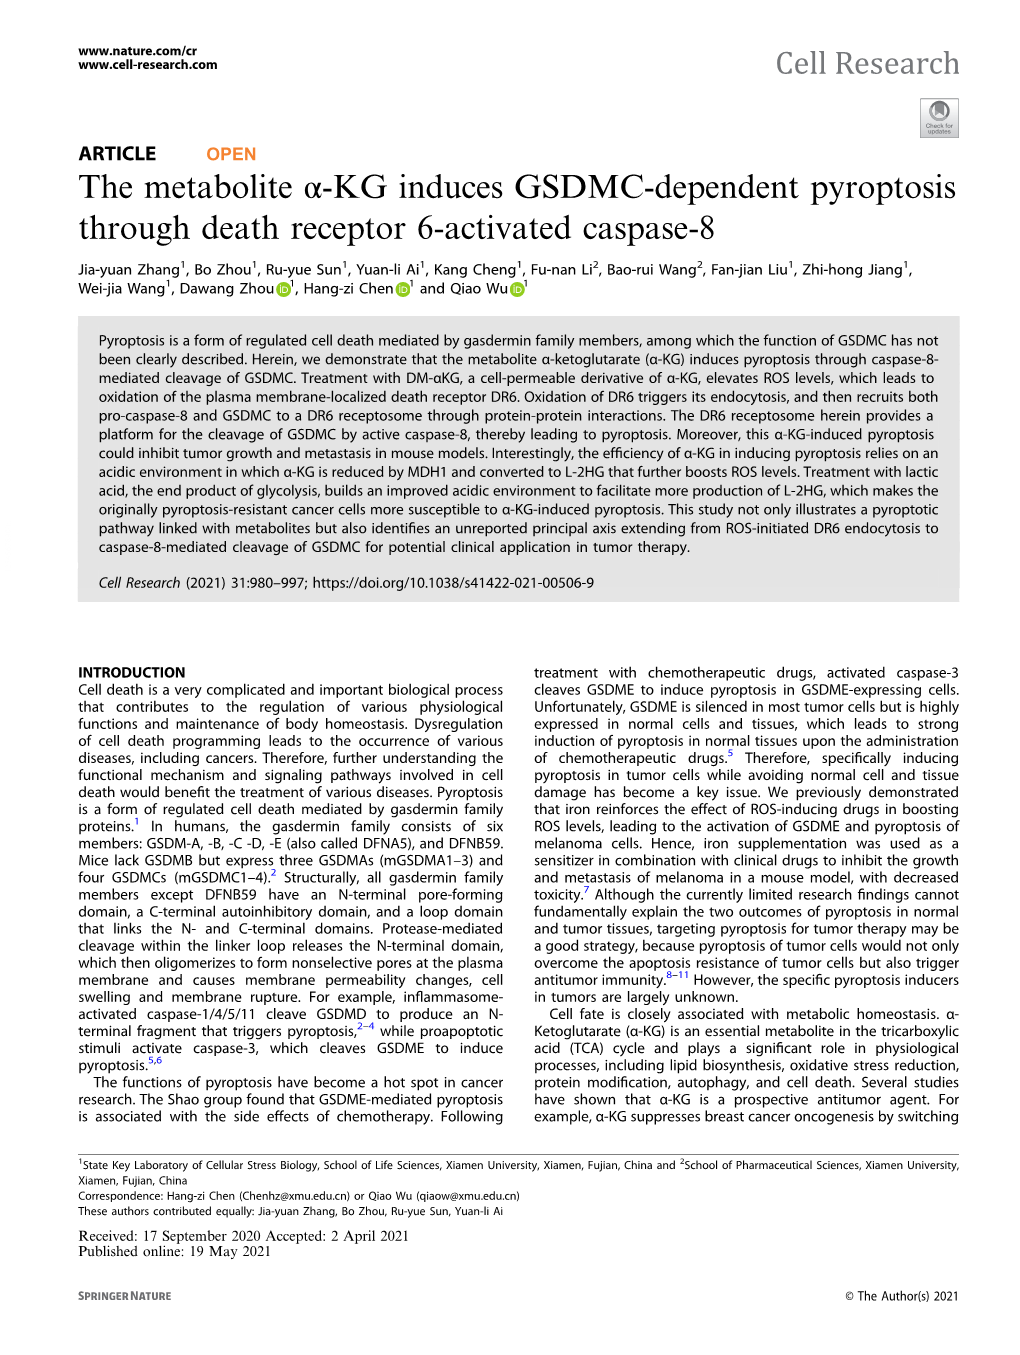 The Metabolite Î±-KG Induces GSDMC-Dependent Pyroptosis Through Death Receptor 6-Activated Caspase-8